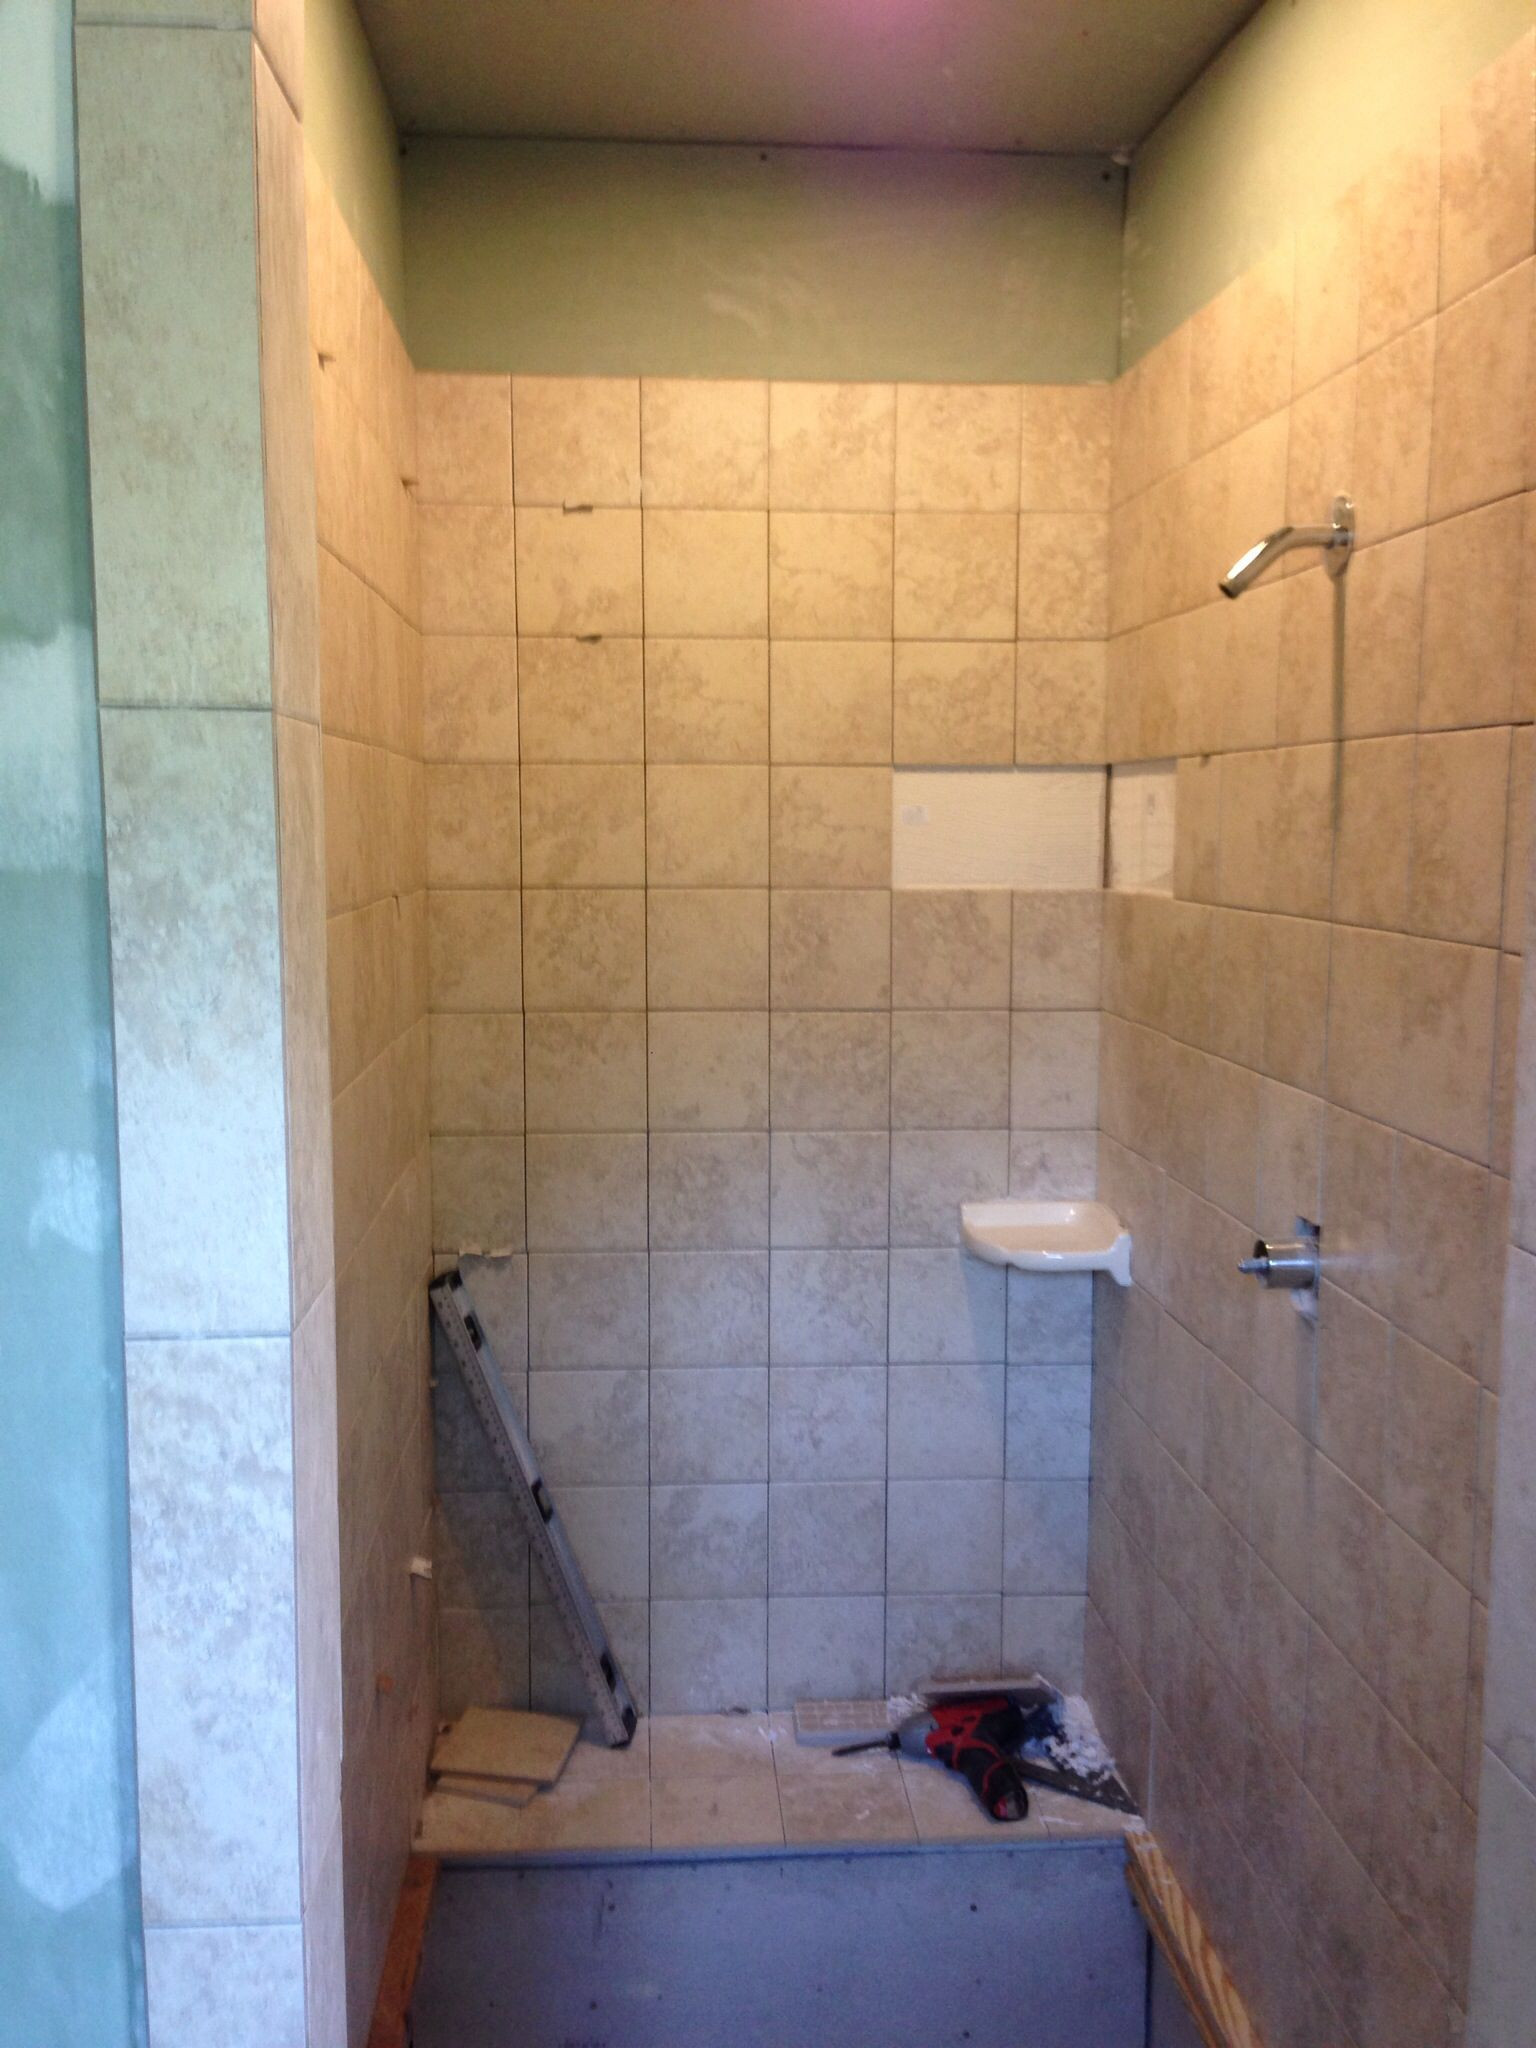 6X6 Tile Bathroom Floor
 Ceramic Tile Shower 6x6 s Tile Projects